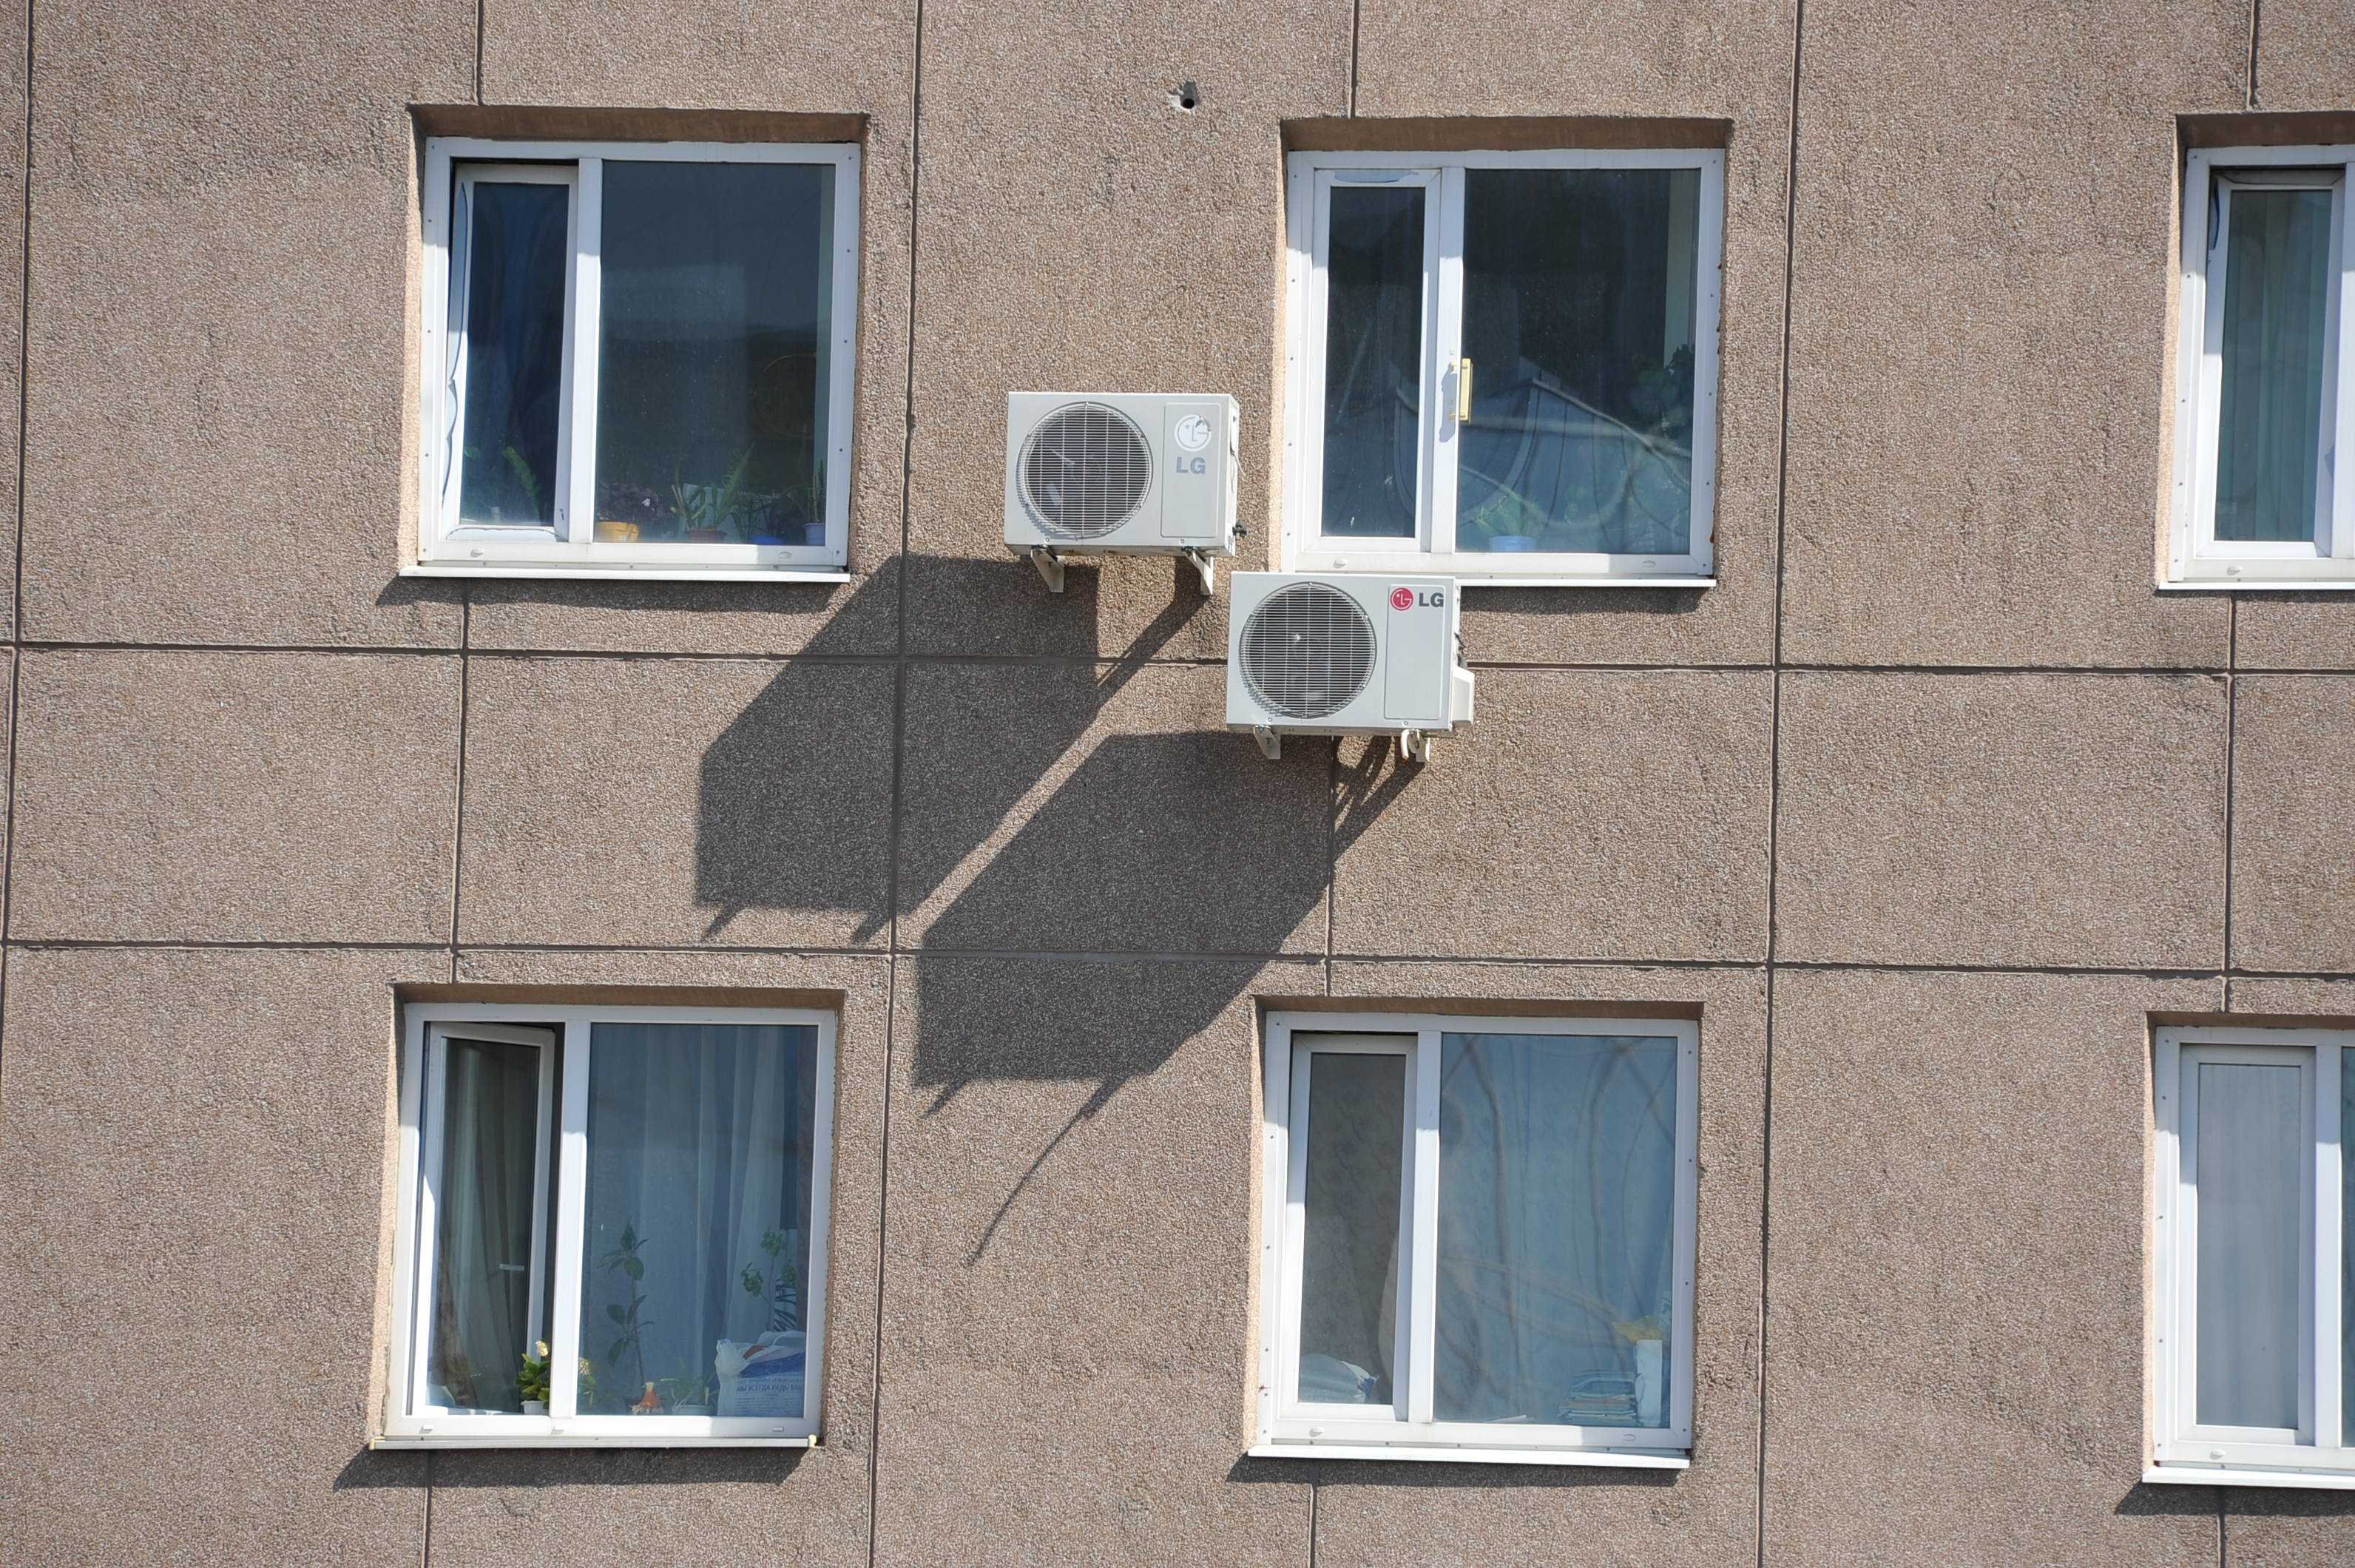 Правила установки кондиционеров на фасадах зданий